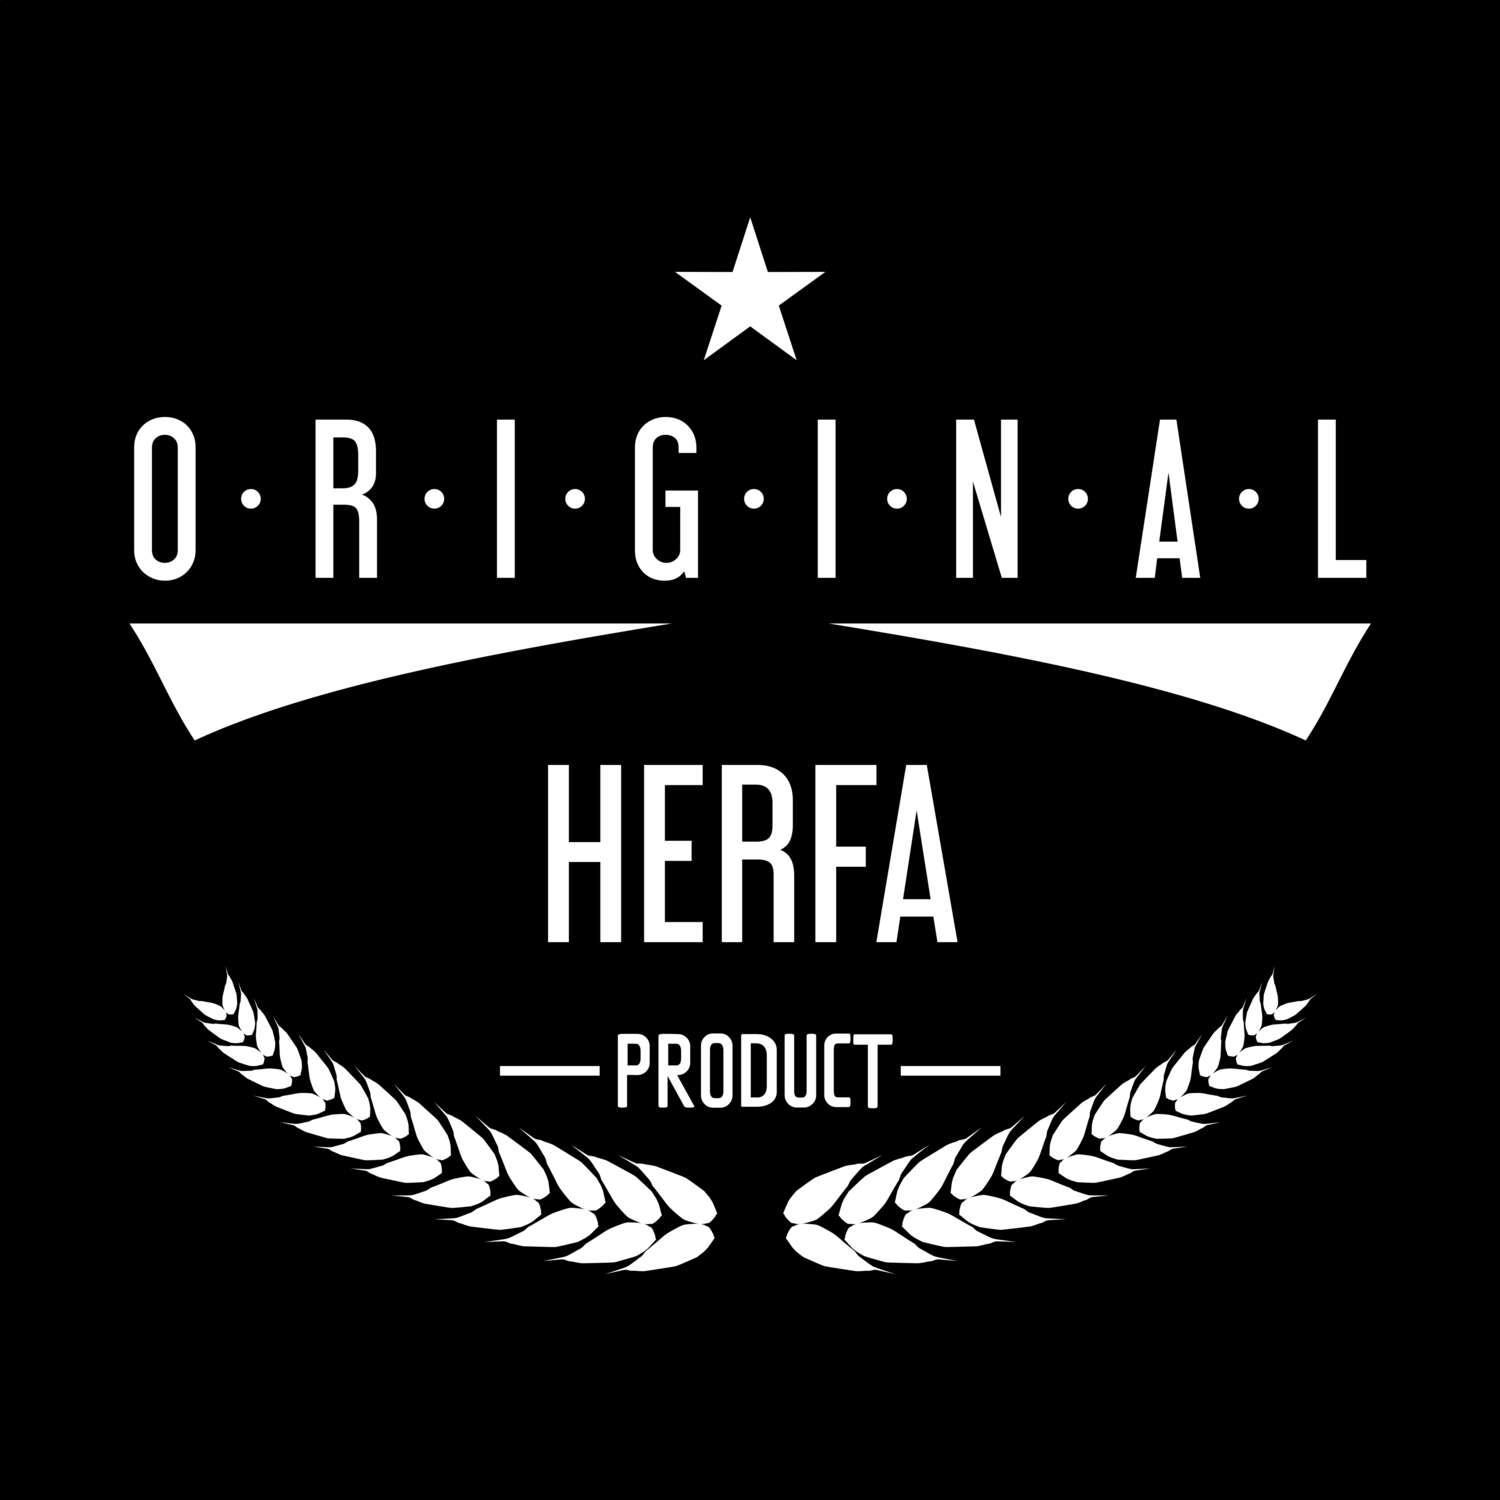 Herfa T-Shirt »Original Product«